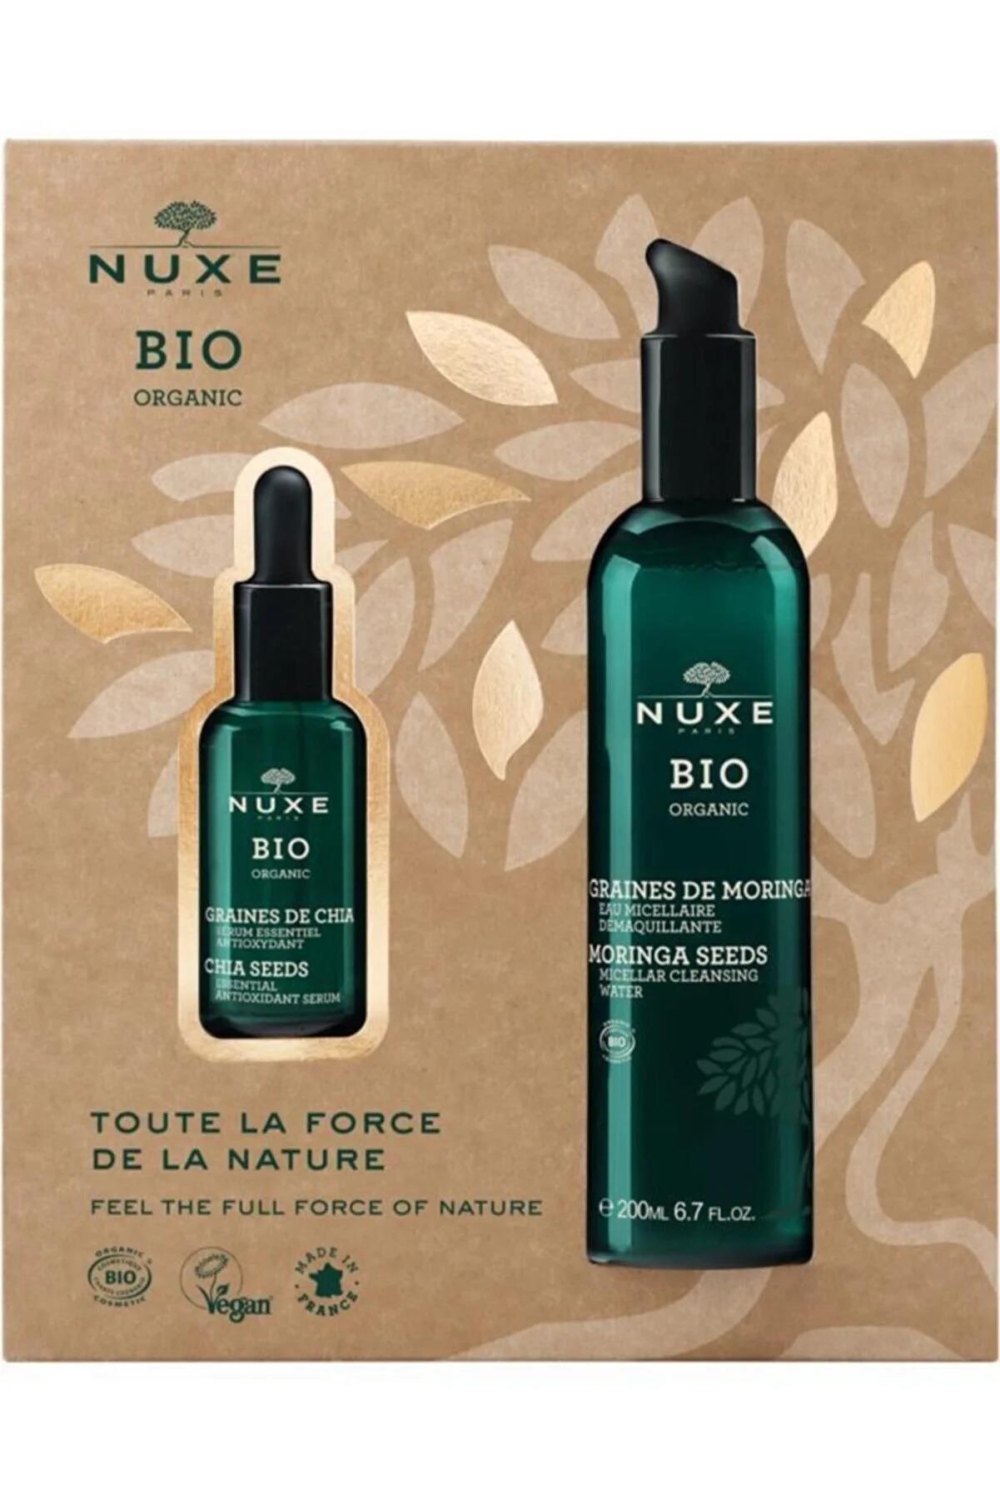 Nuxe Bio Organic Set - 1